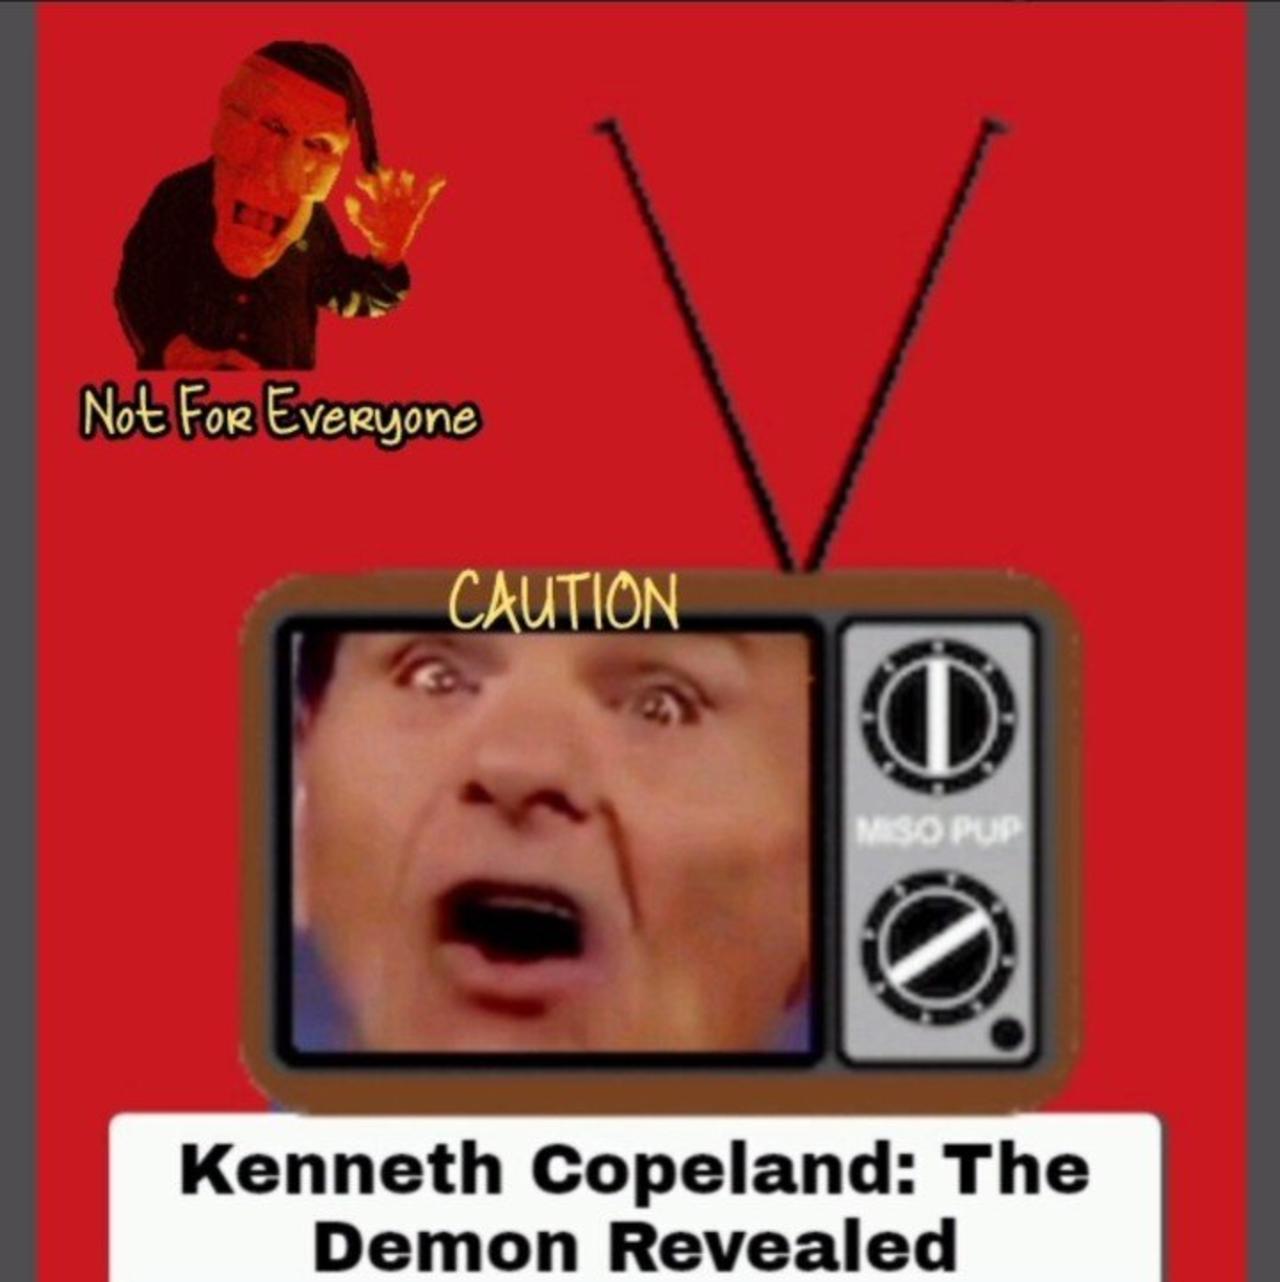 KENNETH COPELAND: THE DEMON REVEALED